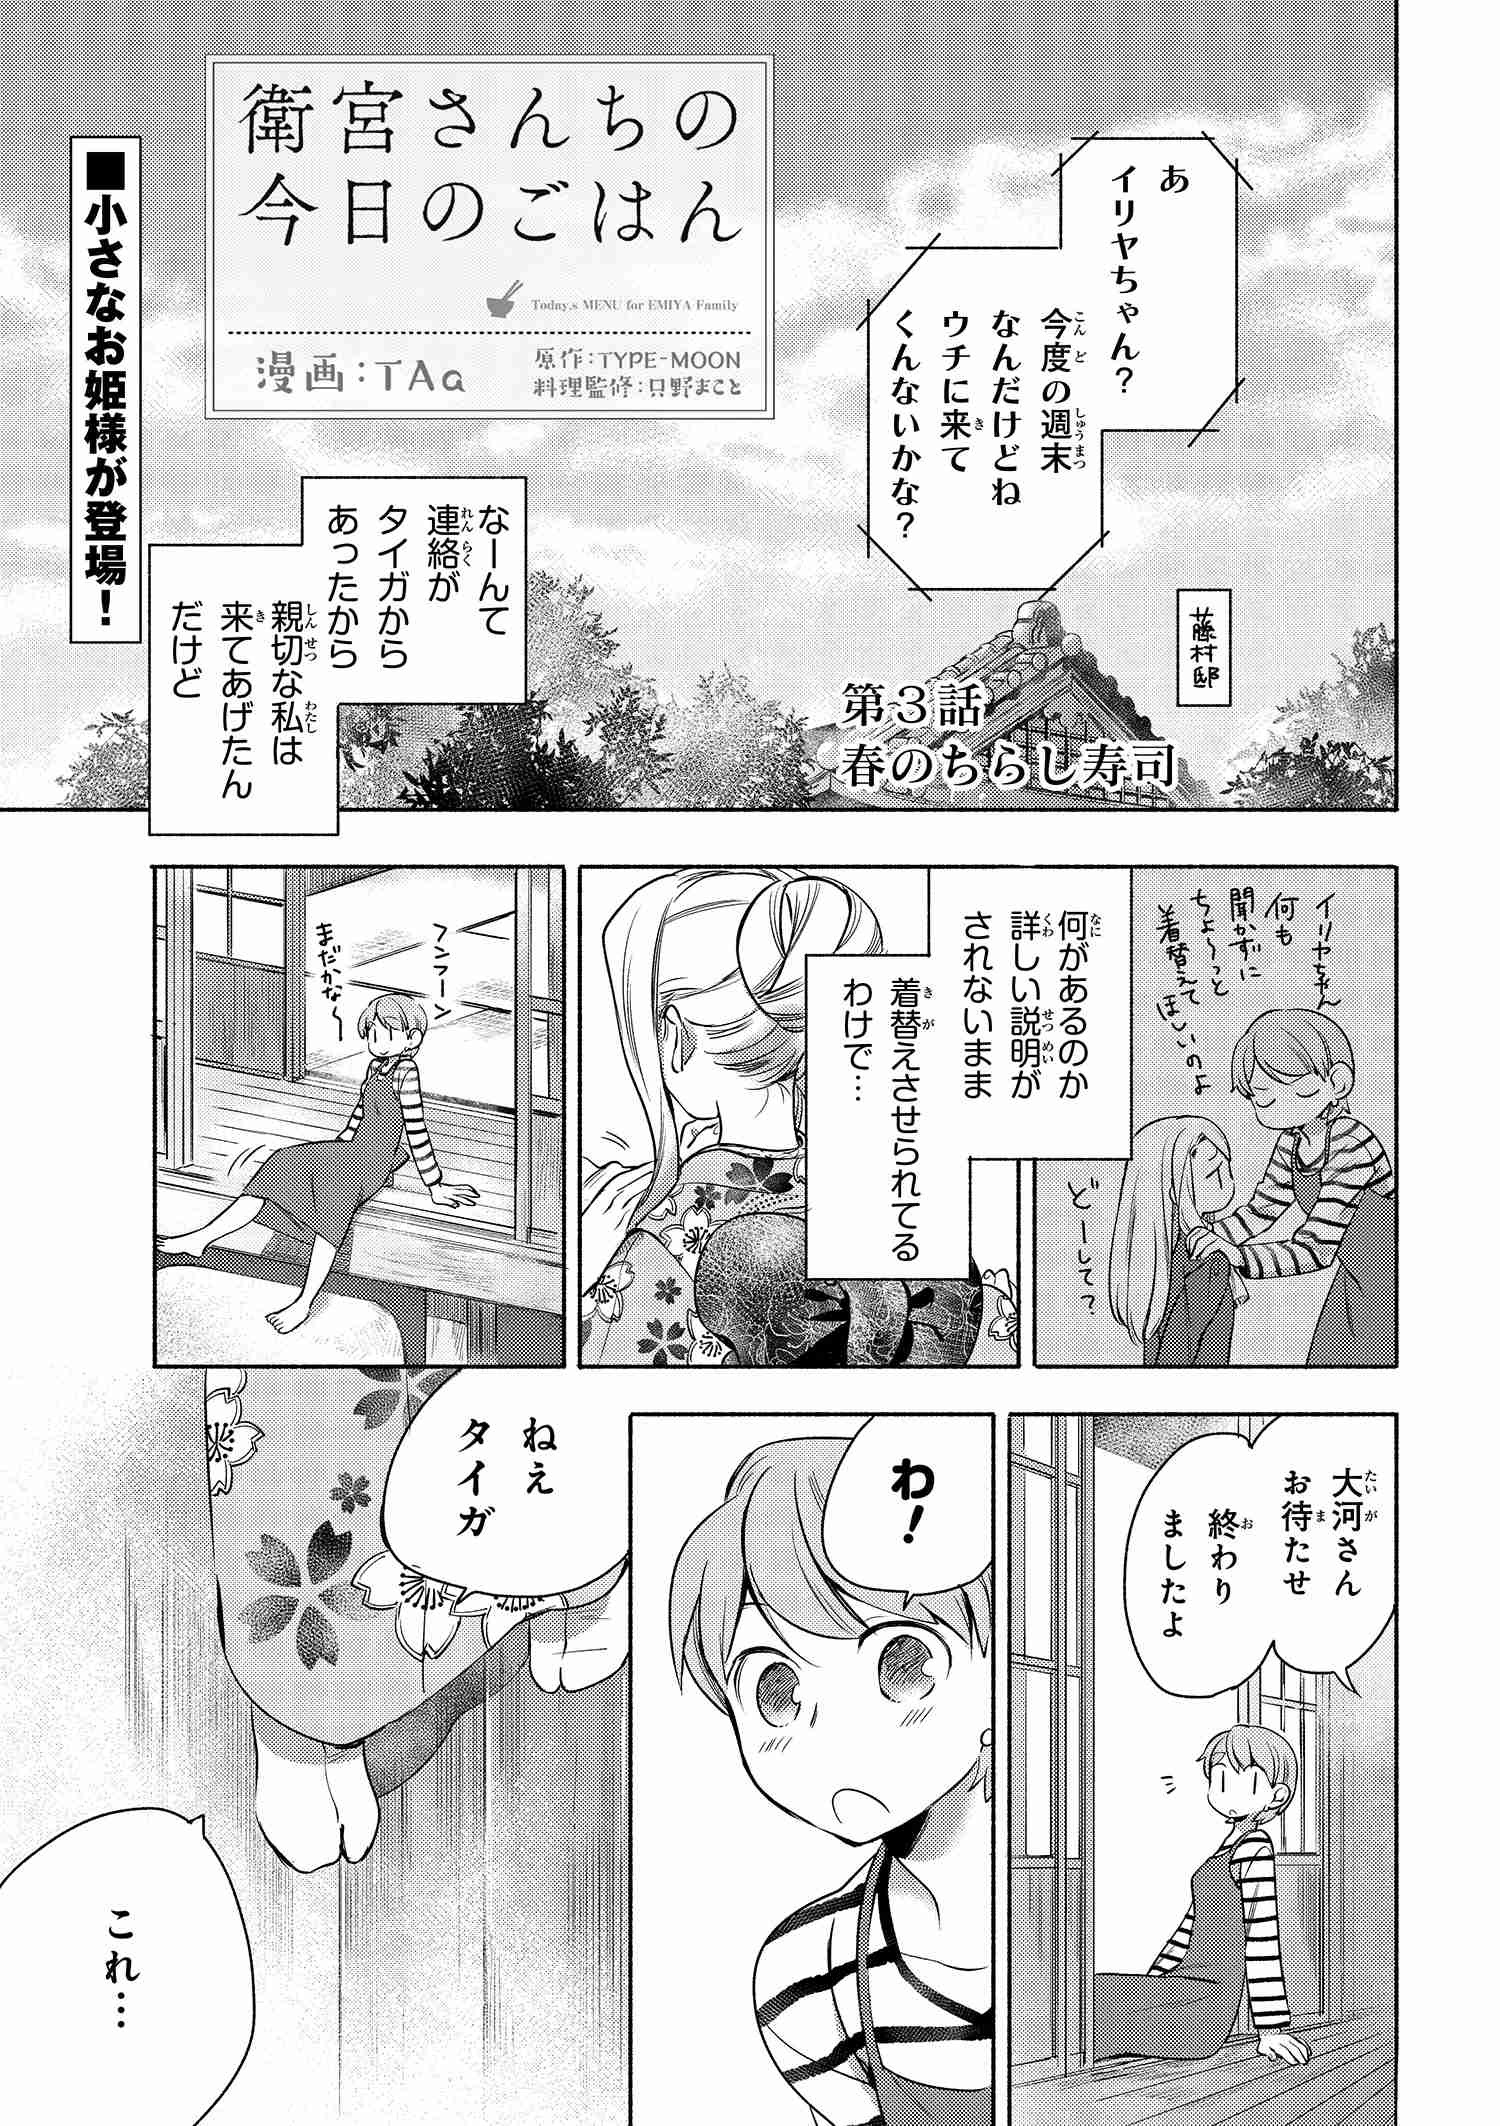 Emiya-san Chi no Kyou no Gohan - Chapter 3 - Page 1